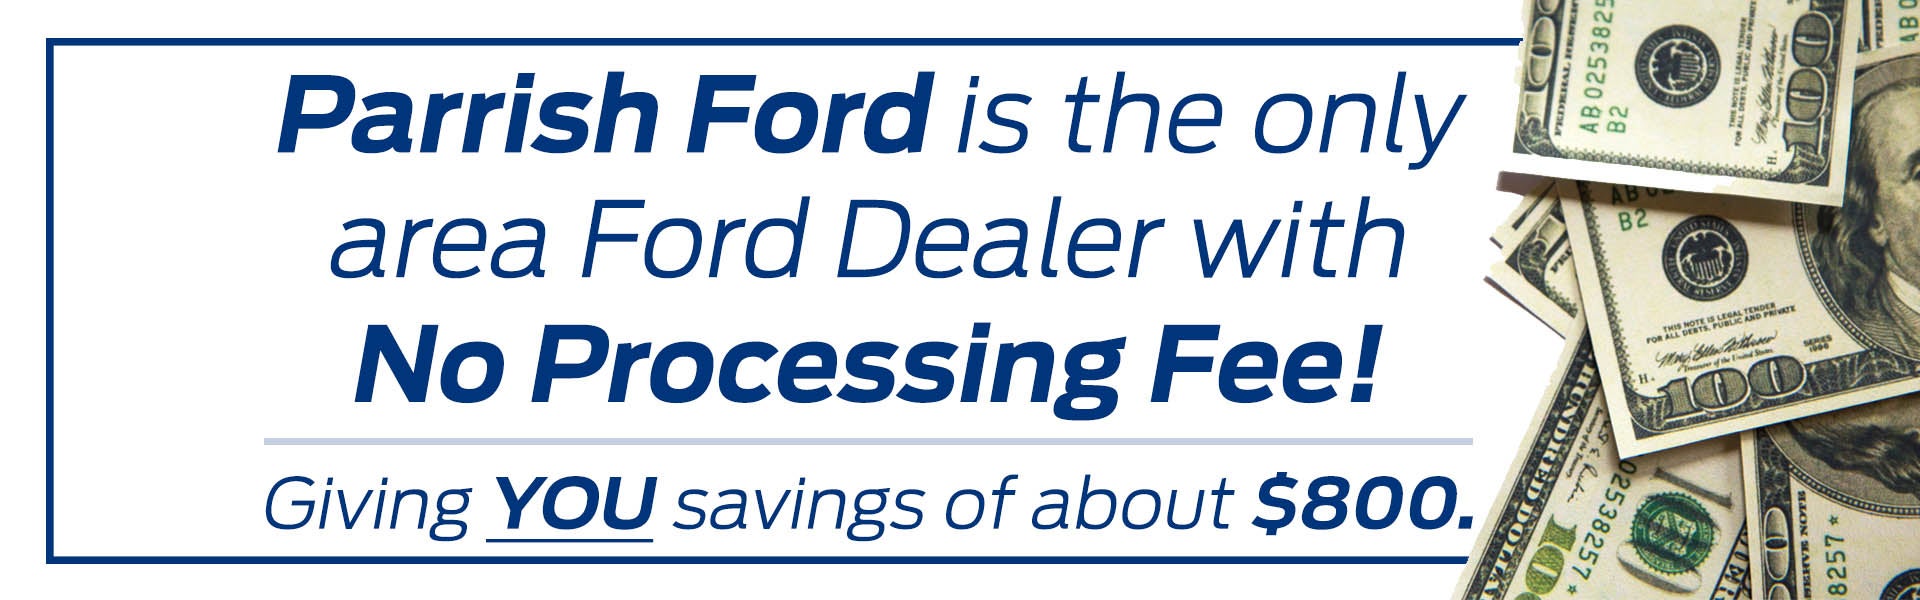 No Processing Fee at Parrish Ford